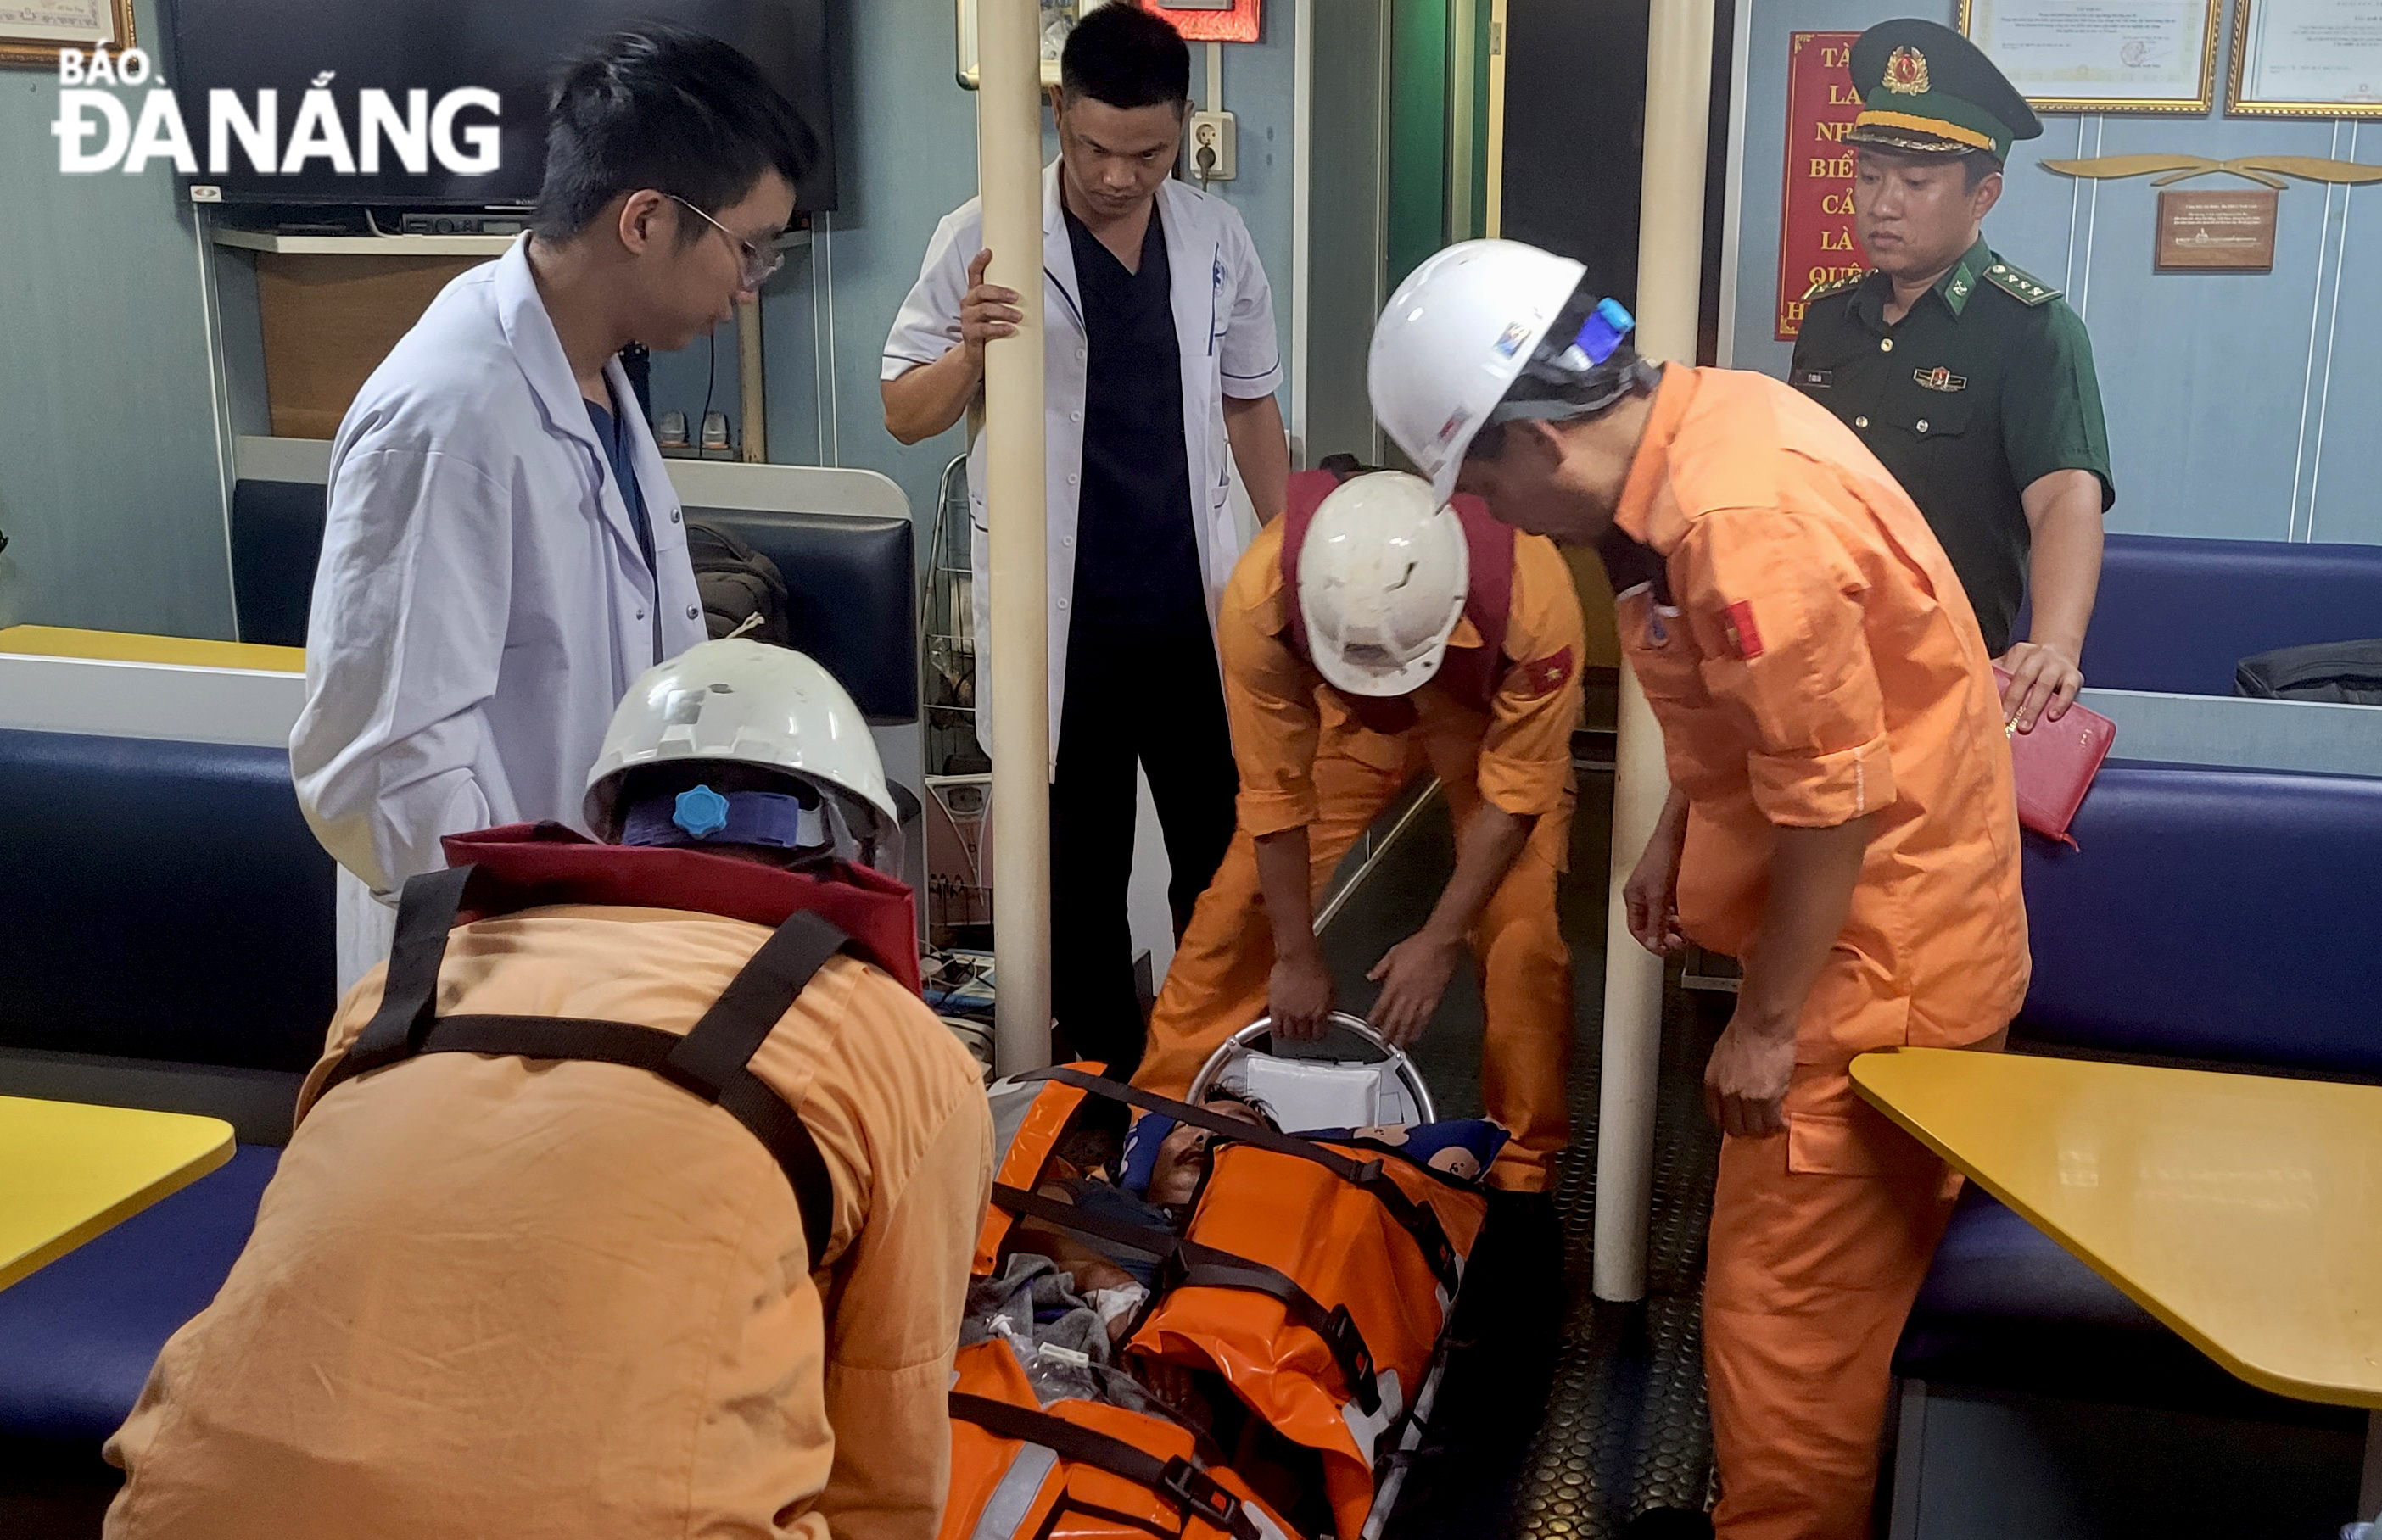 At 5:15 am on April 9, Da Nang MRCC brought the crew member back to Da Nang mainland safely 